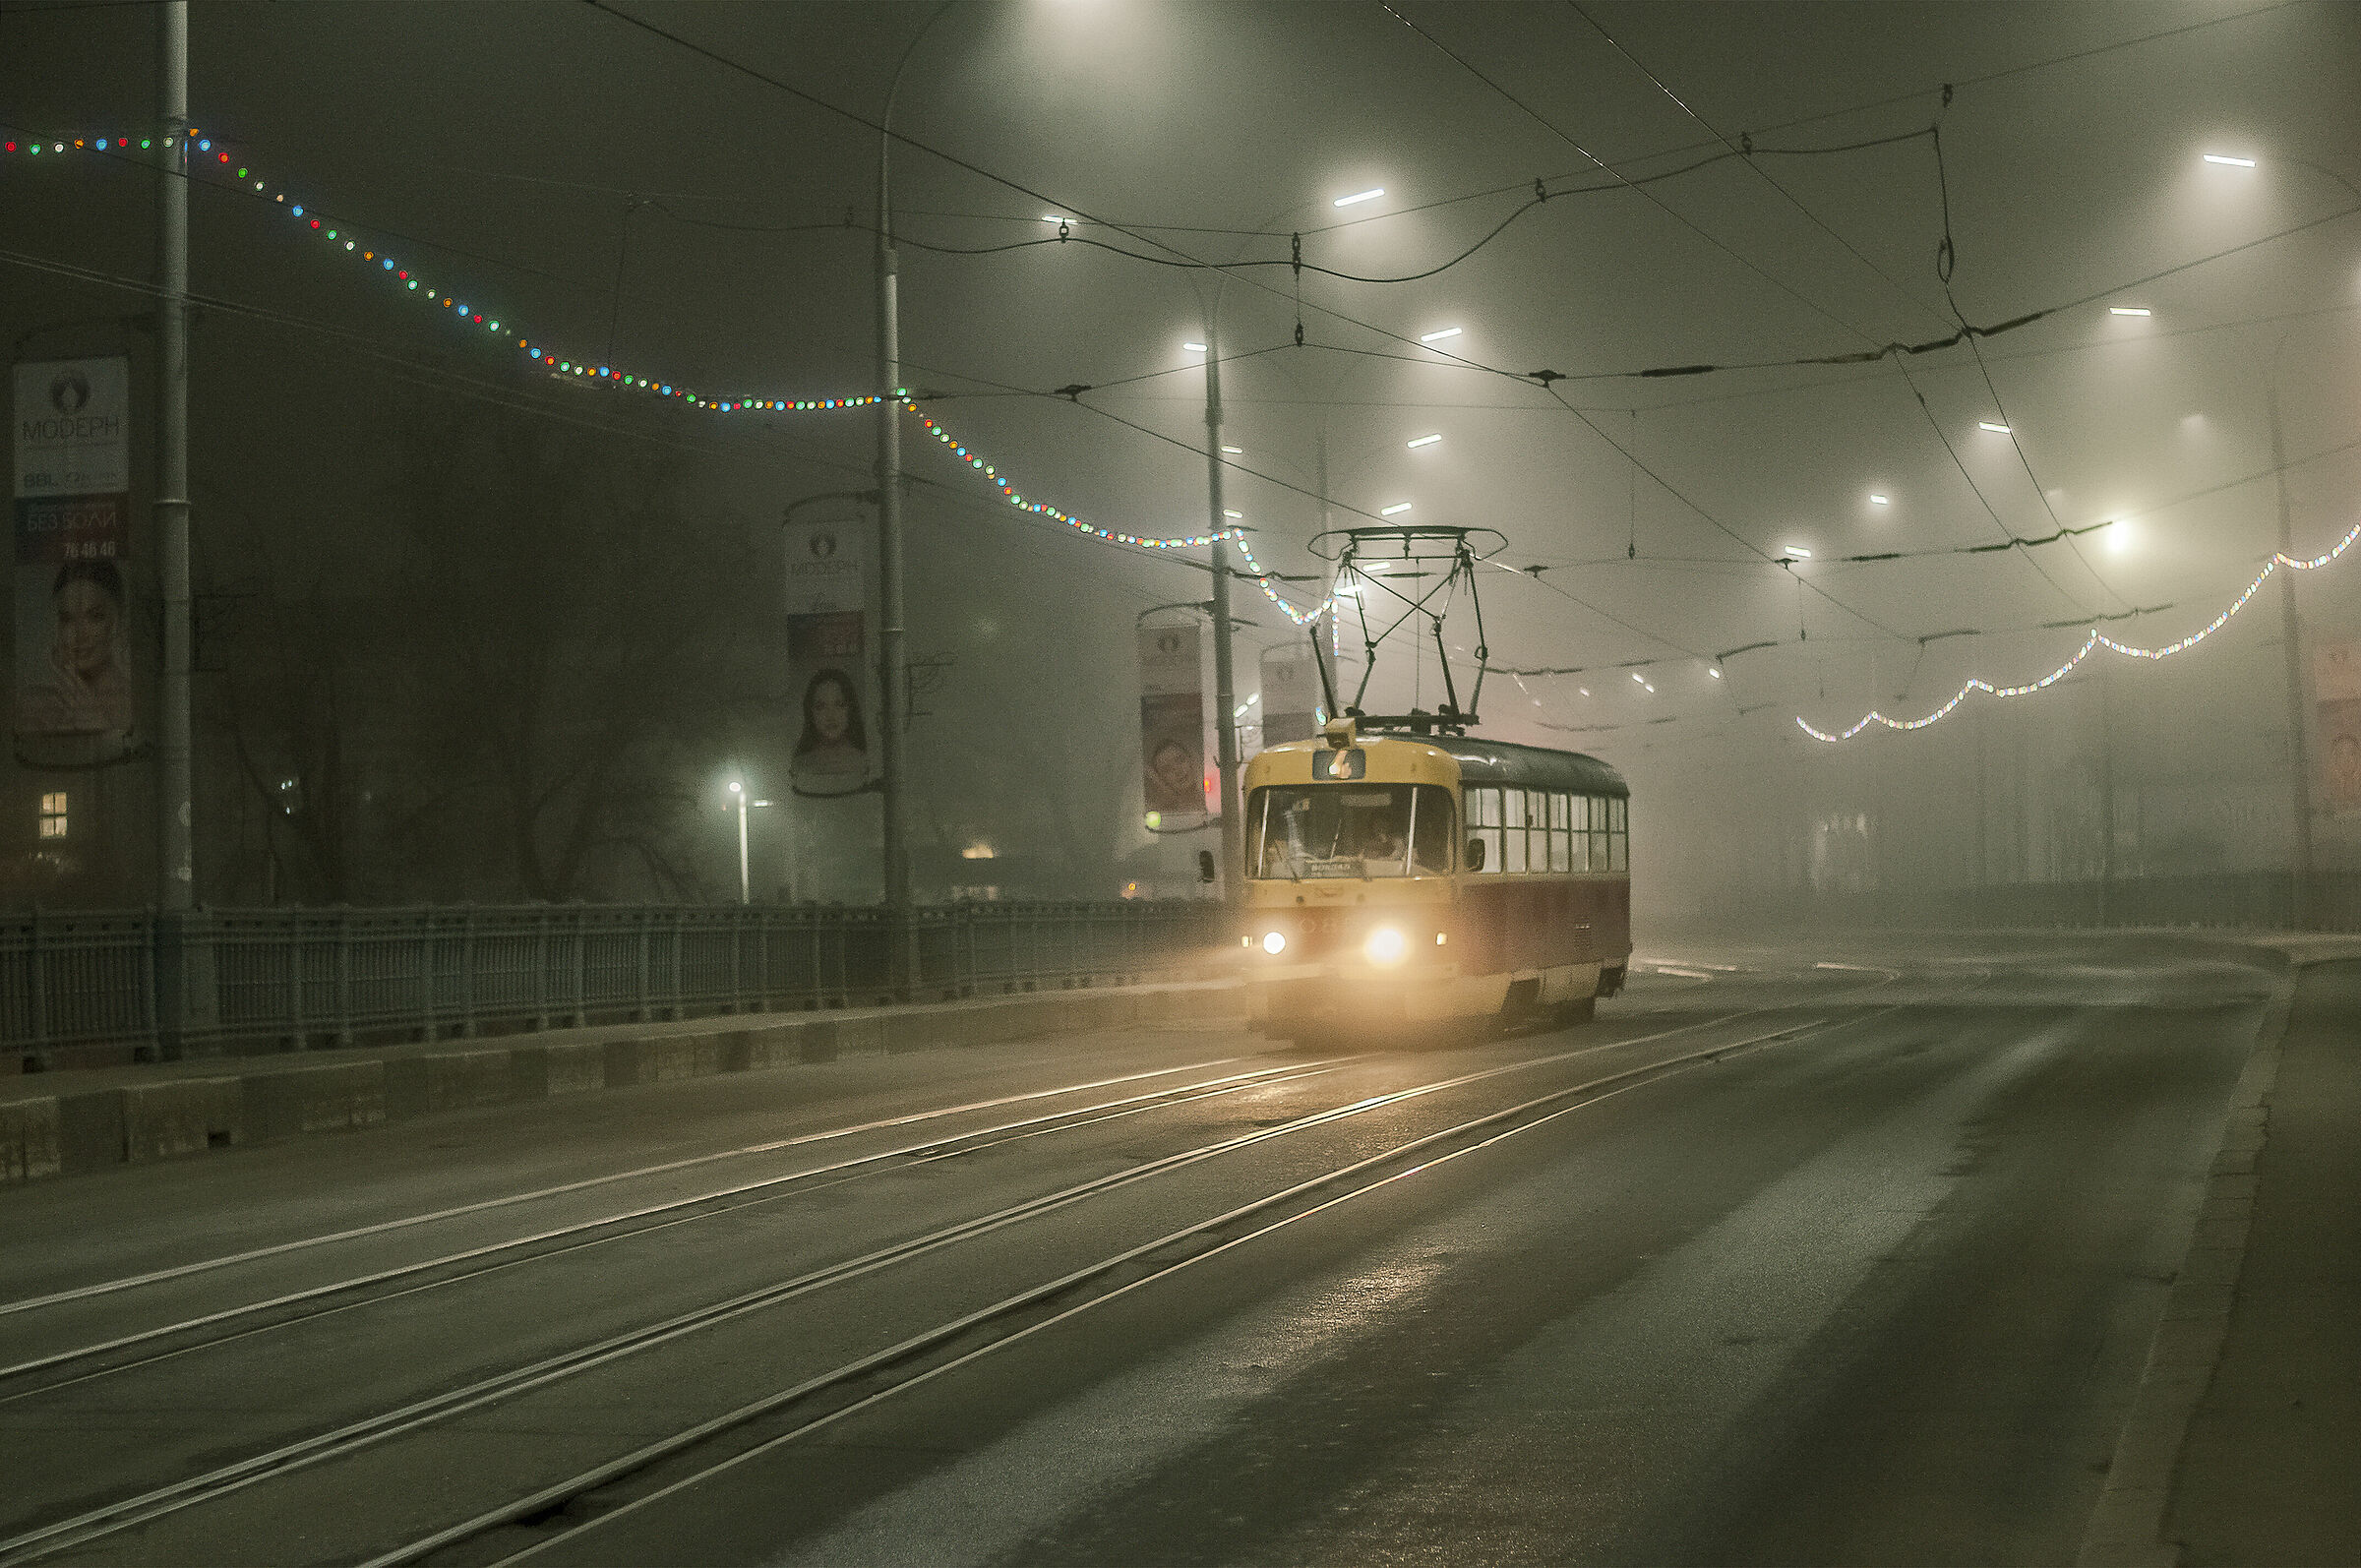 An old cable car on a night trip through a foggy city.....